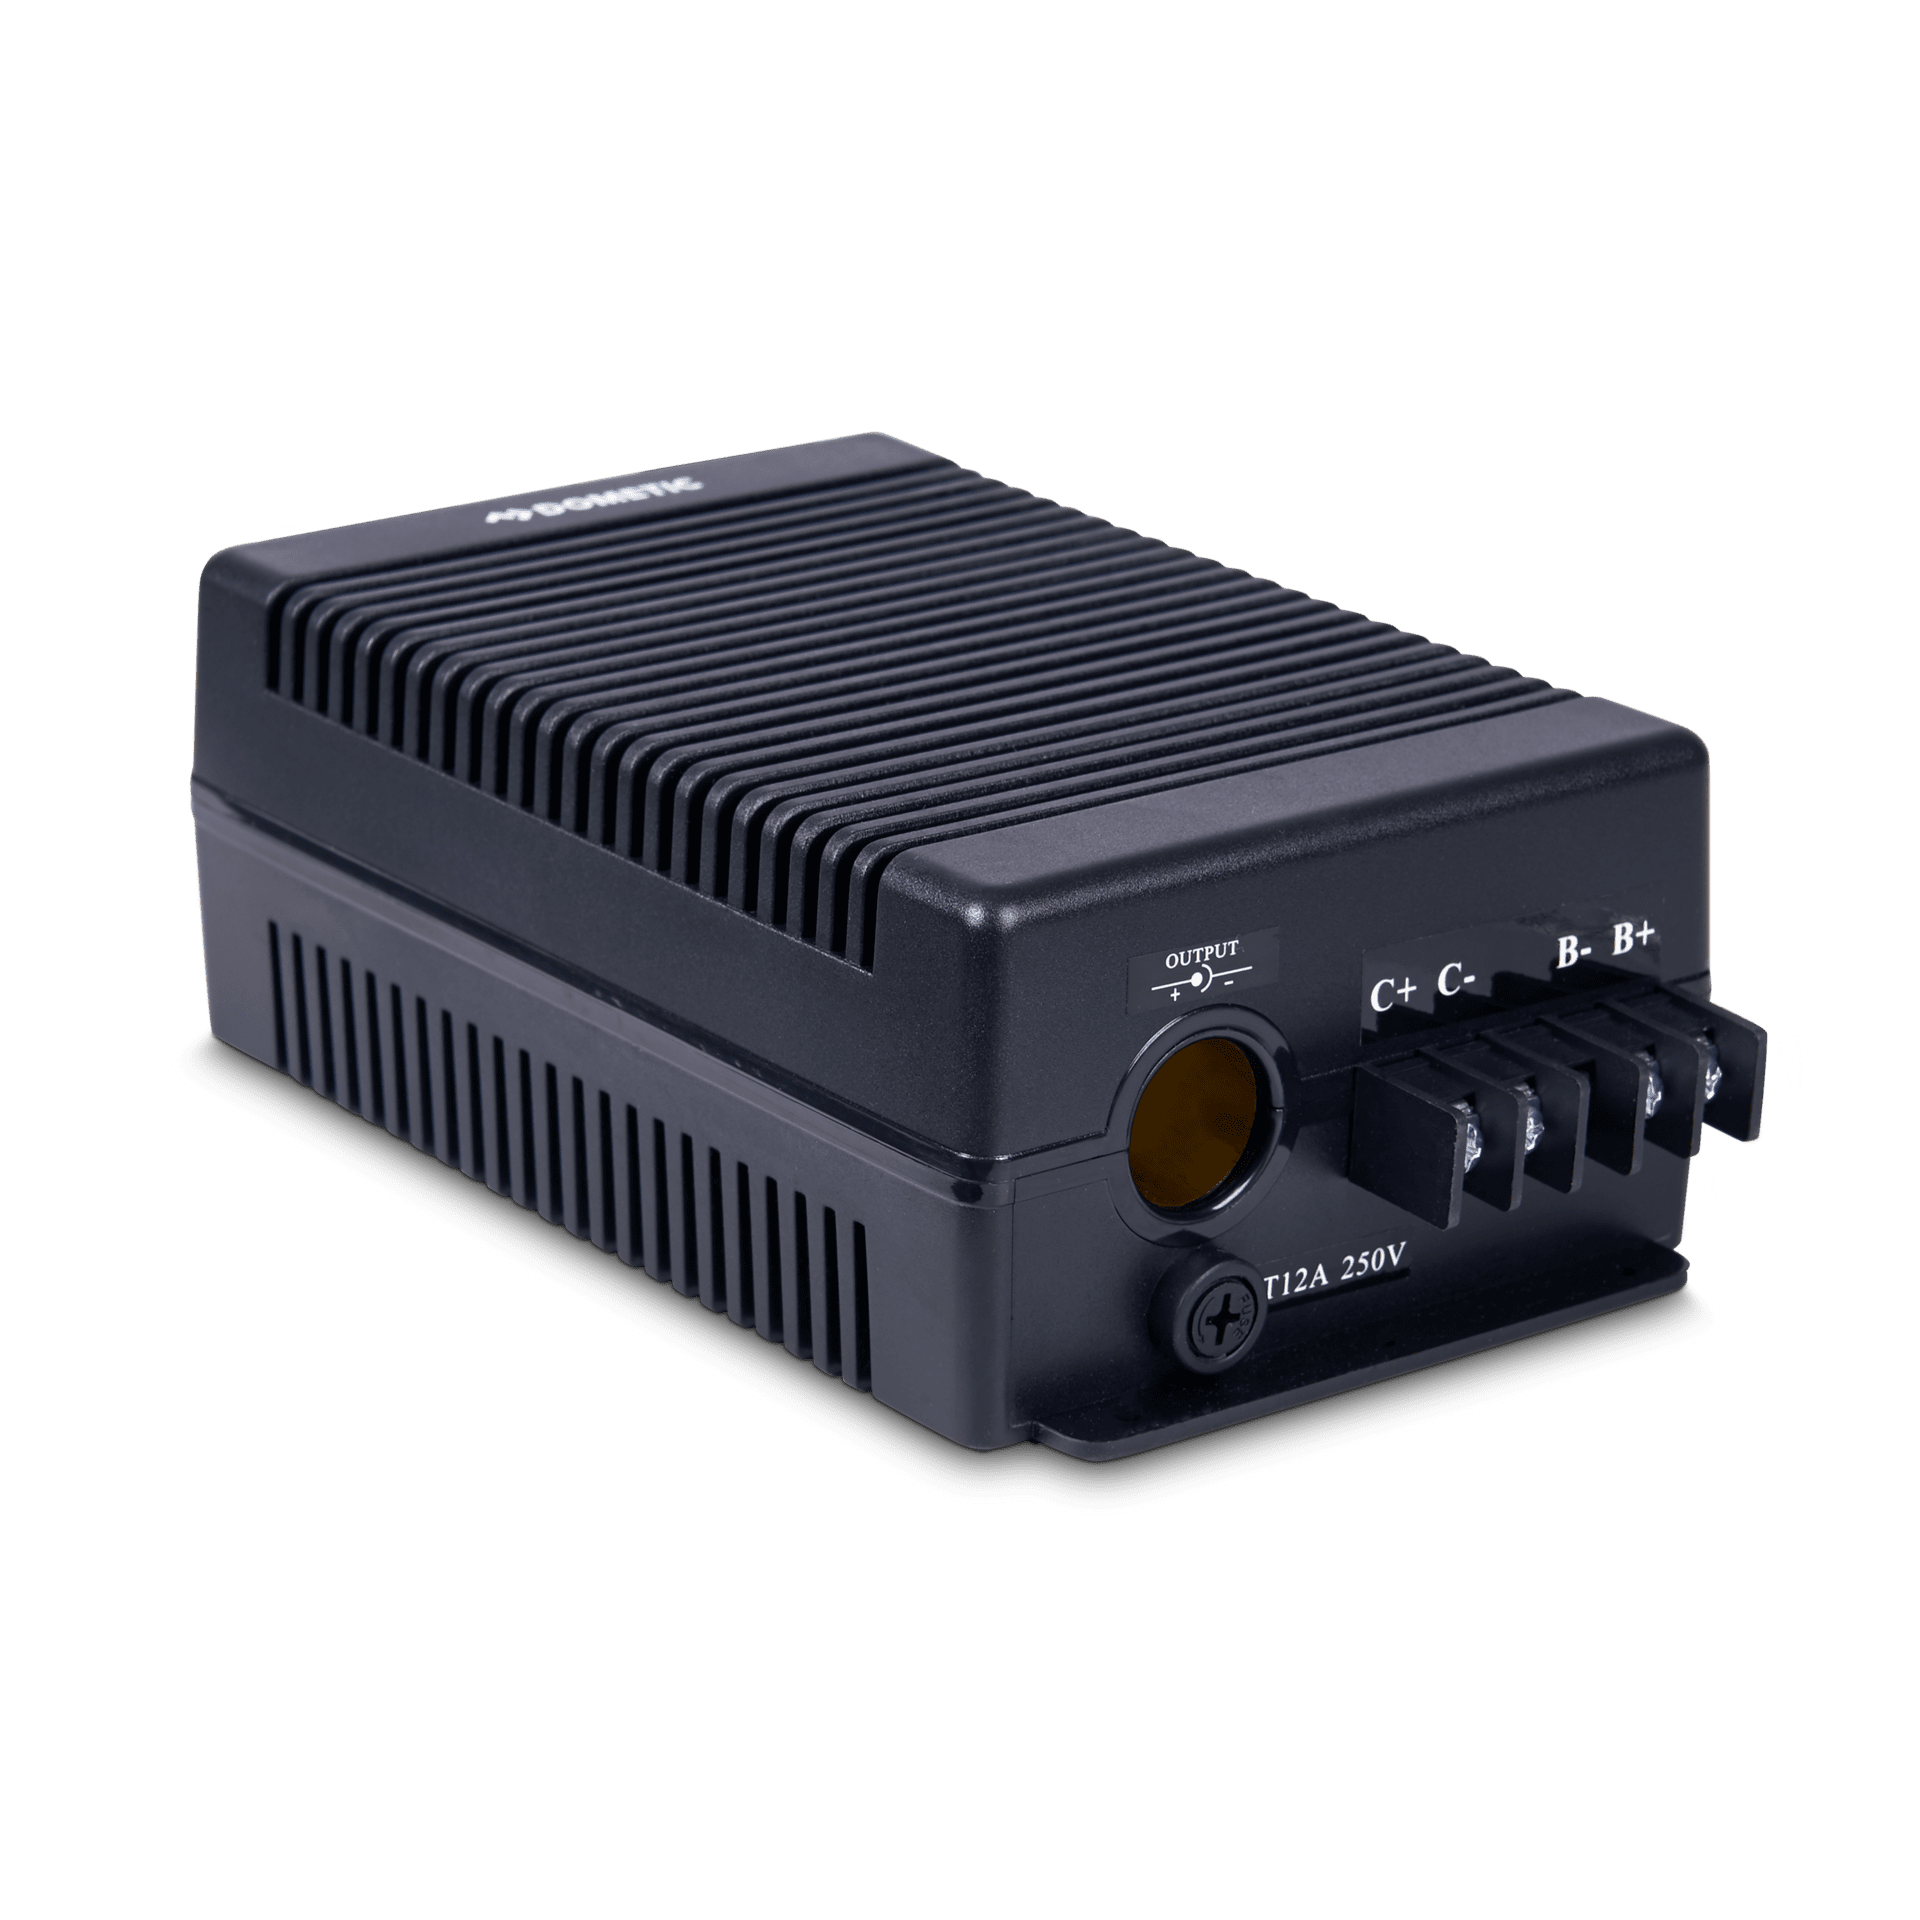 MPS-50US Converter Plug, 110-240VAC to 24VDC